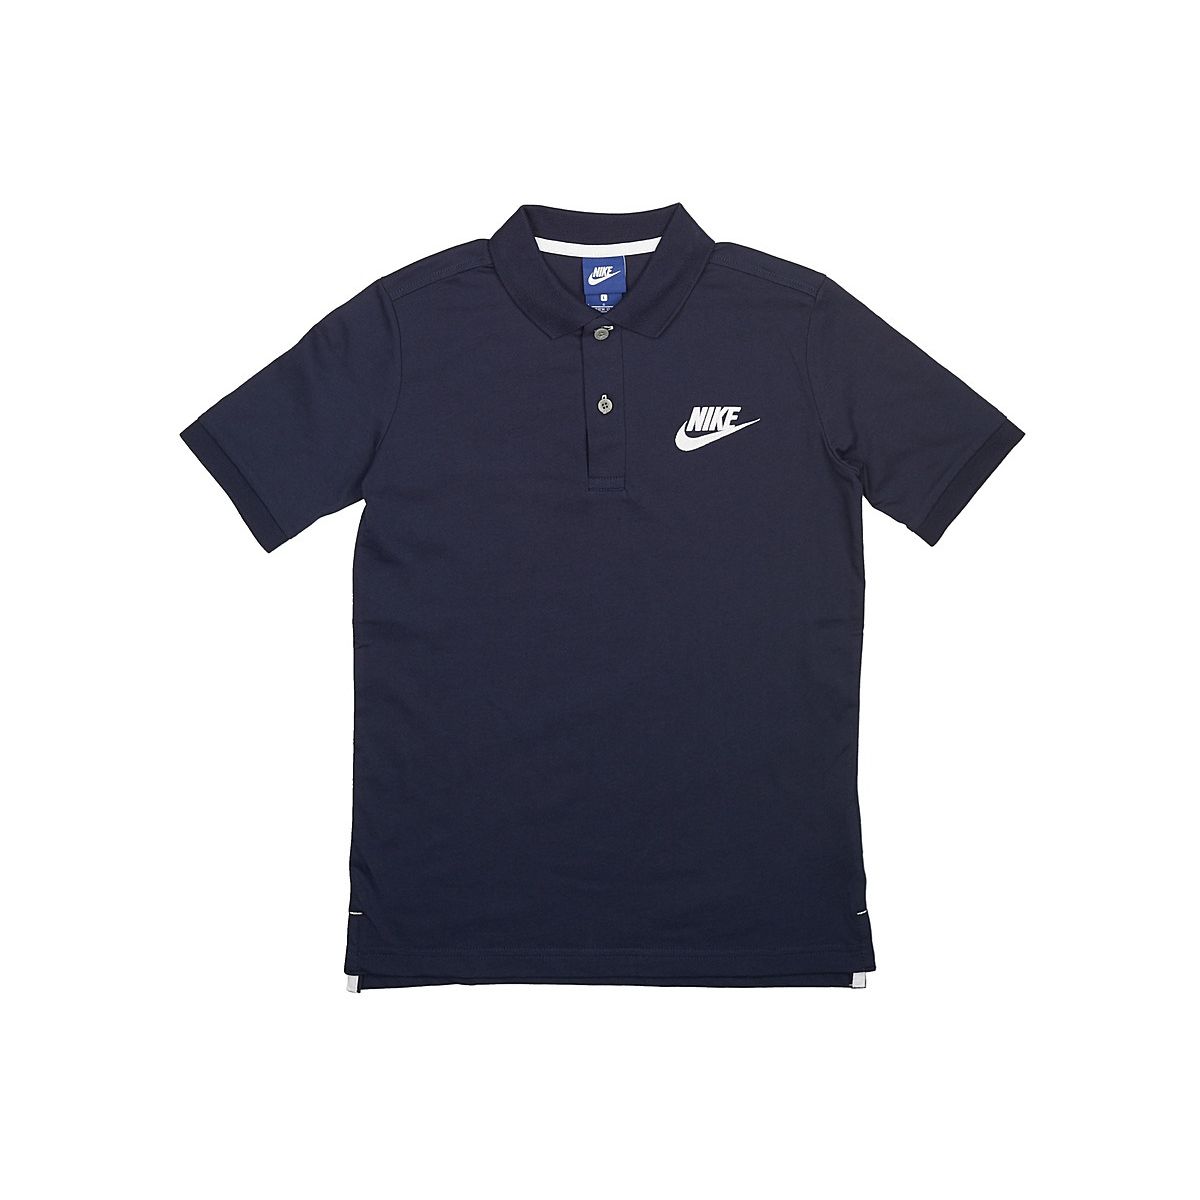 Nike Sportswear Boys' Polo 826437-453